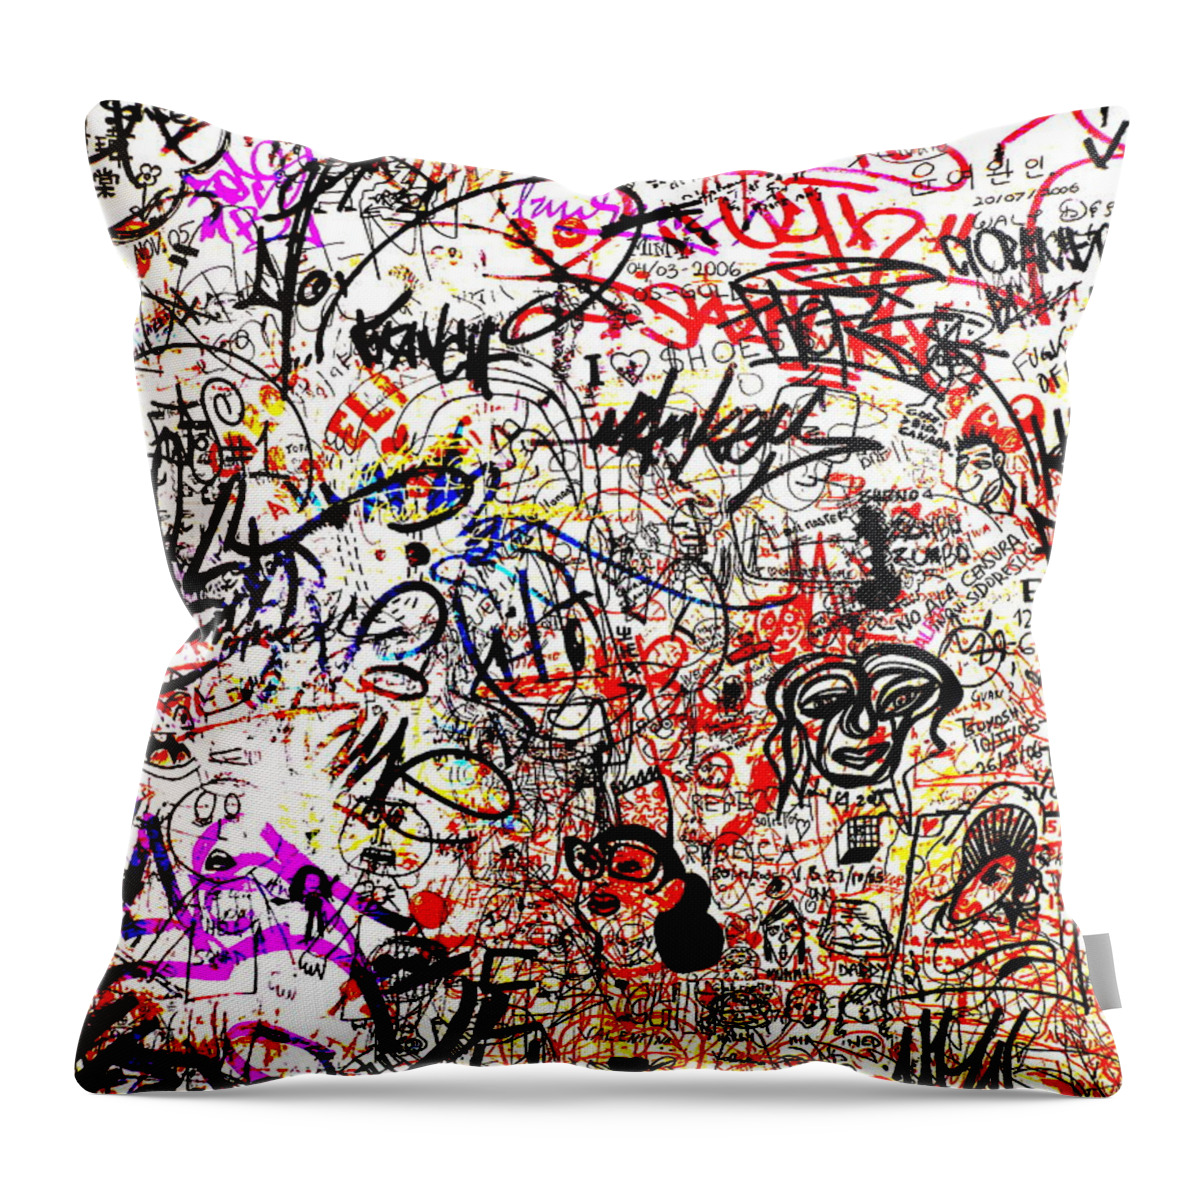 Graffiti Throw Pillow featuring the photograph Barcelona Graffiti Heaven by Funkpix Photo Hunter